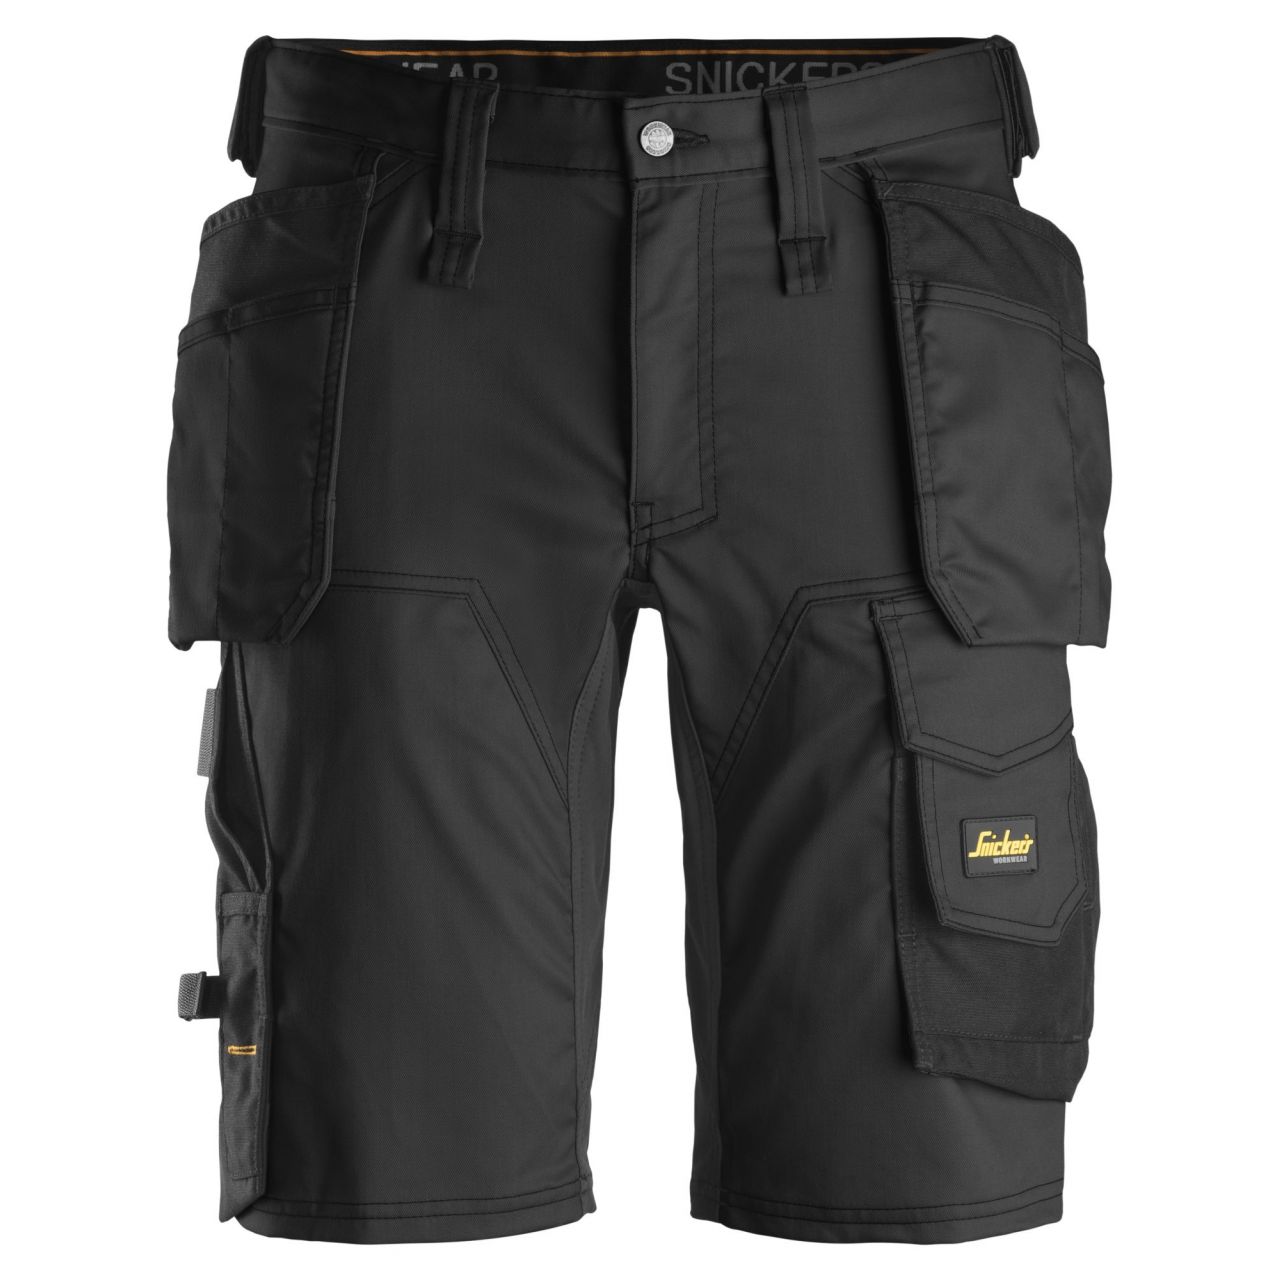 Pantalones cortos elásticos AllroundWork + Bolsillos Flotantes Negro talla 50